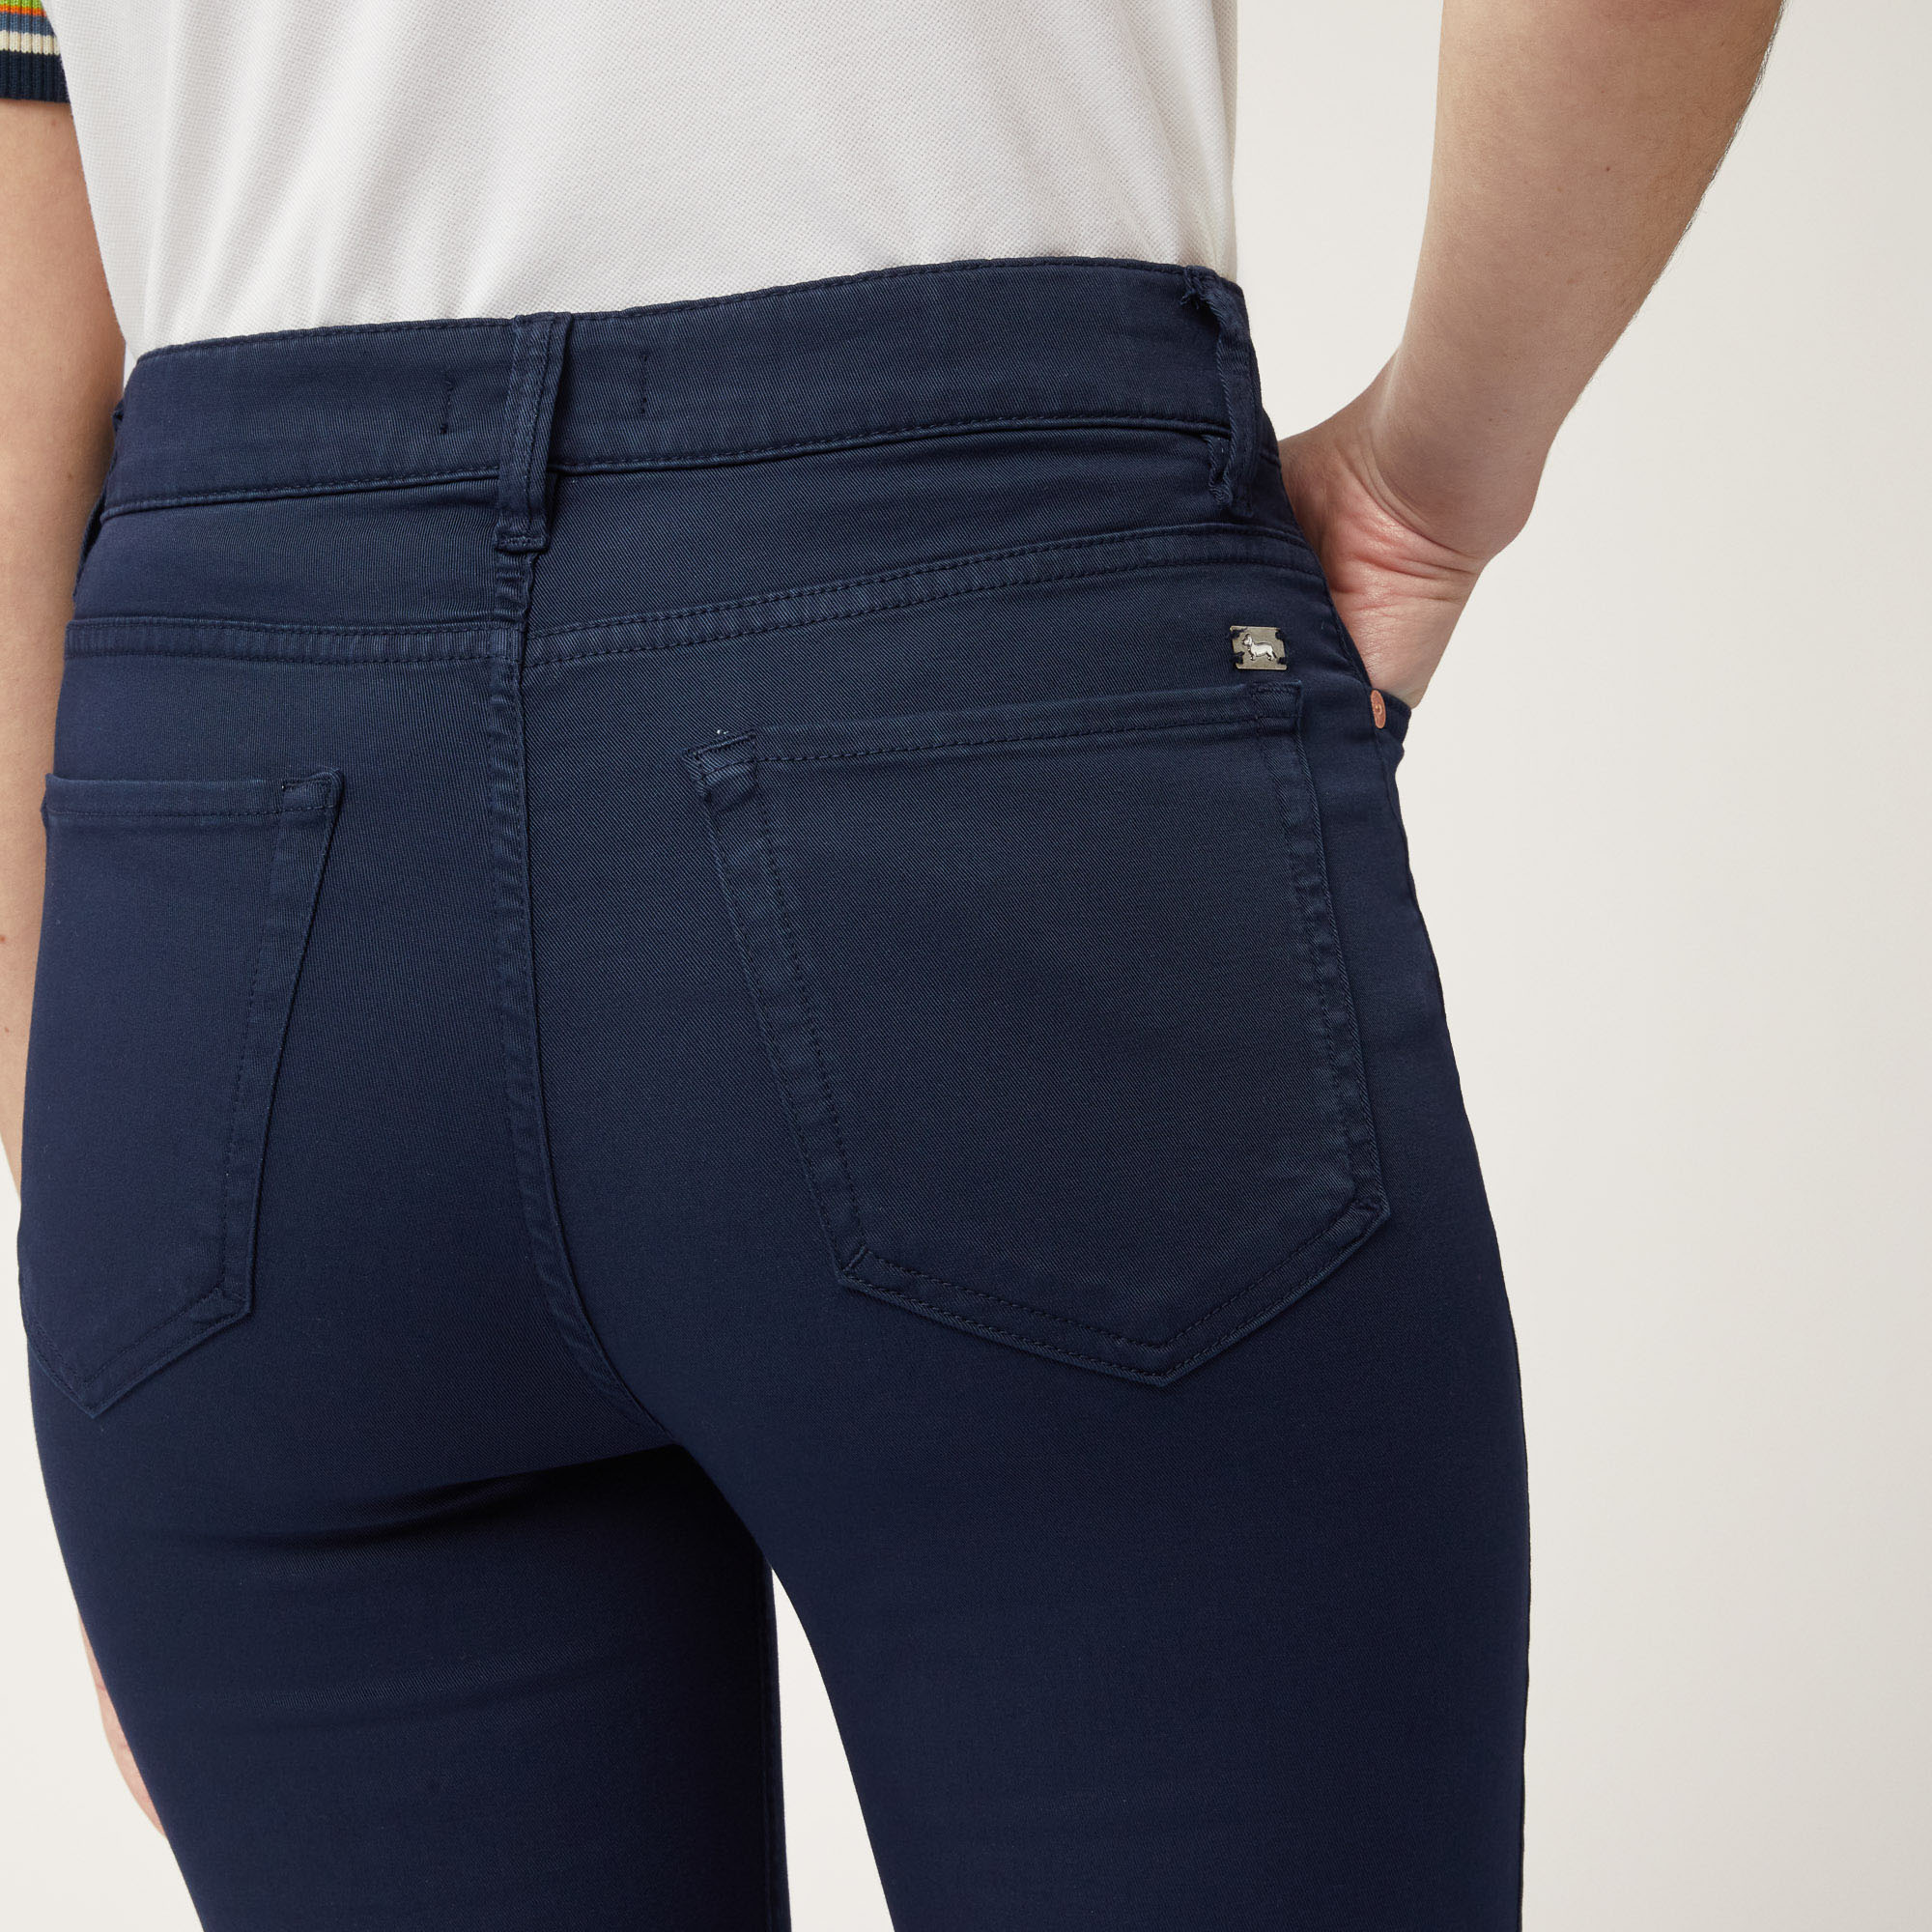 Pantaloni Slim Fit, Blu Navy, large image number 2